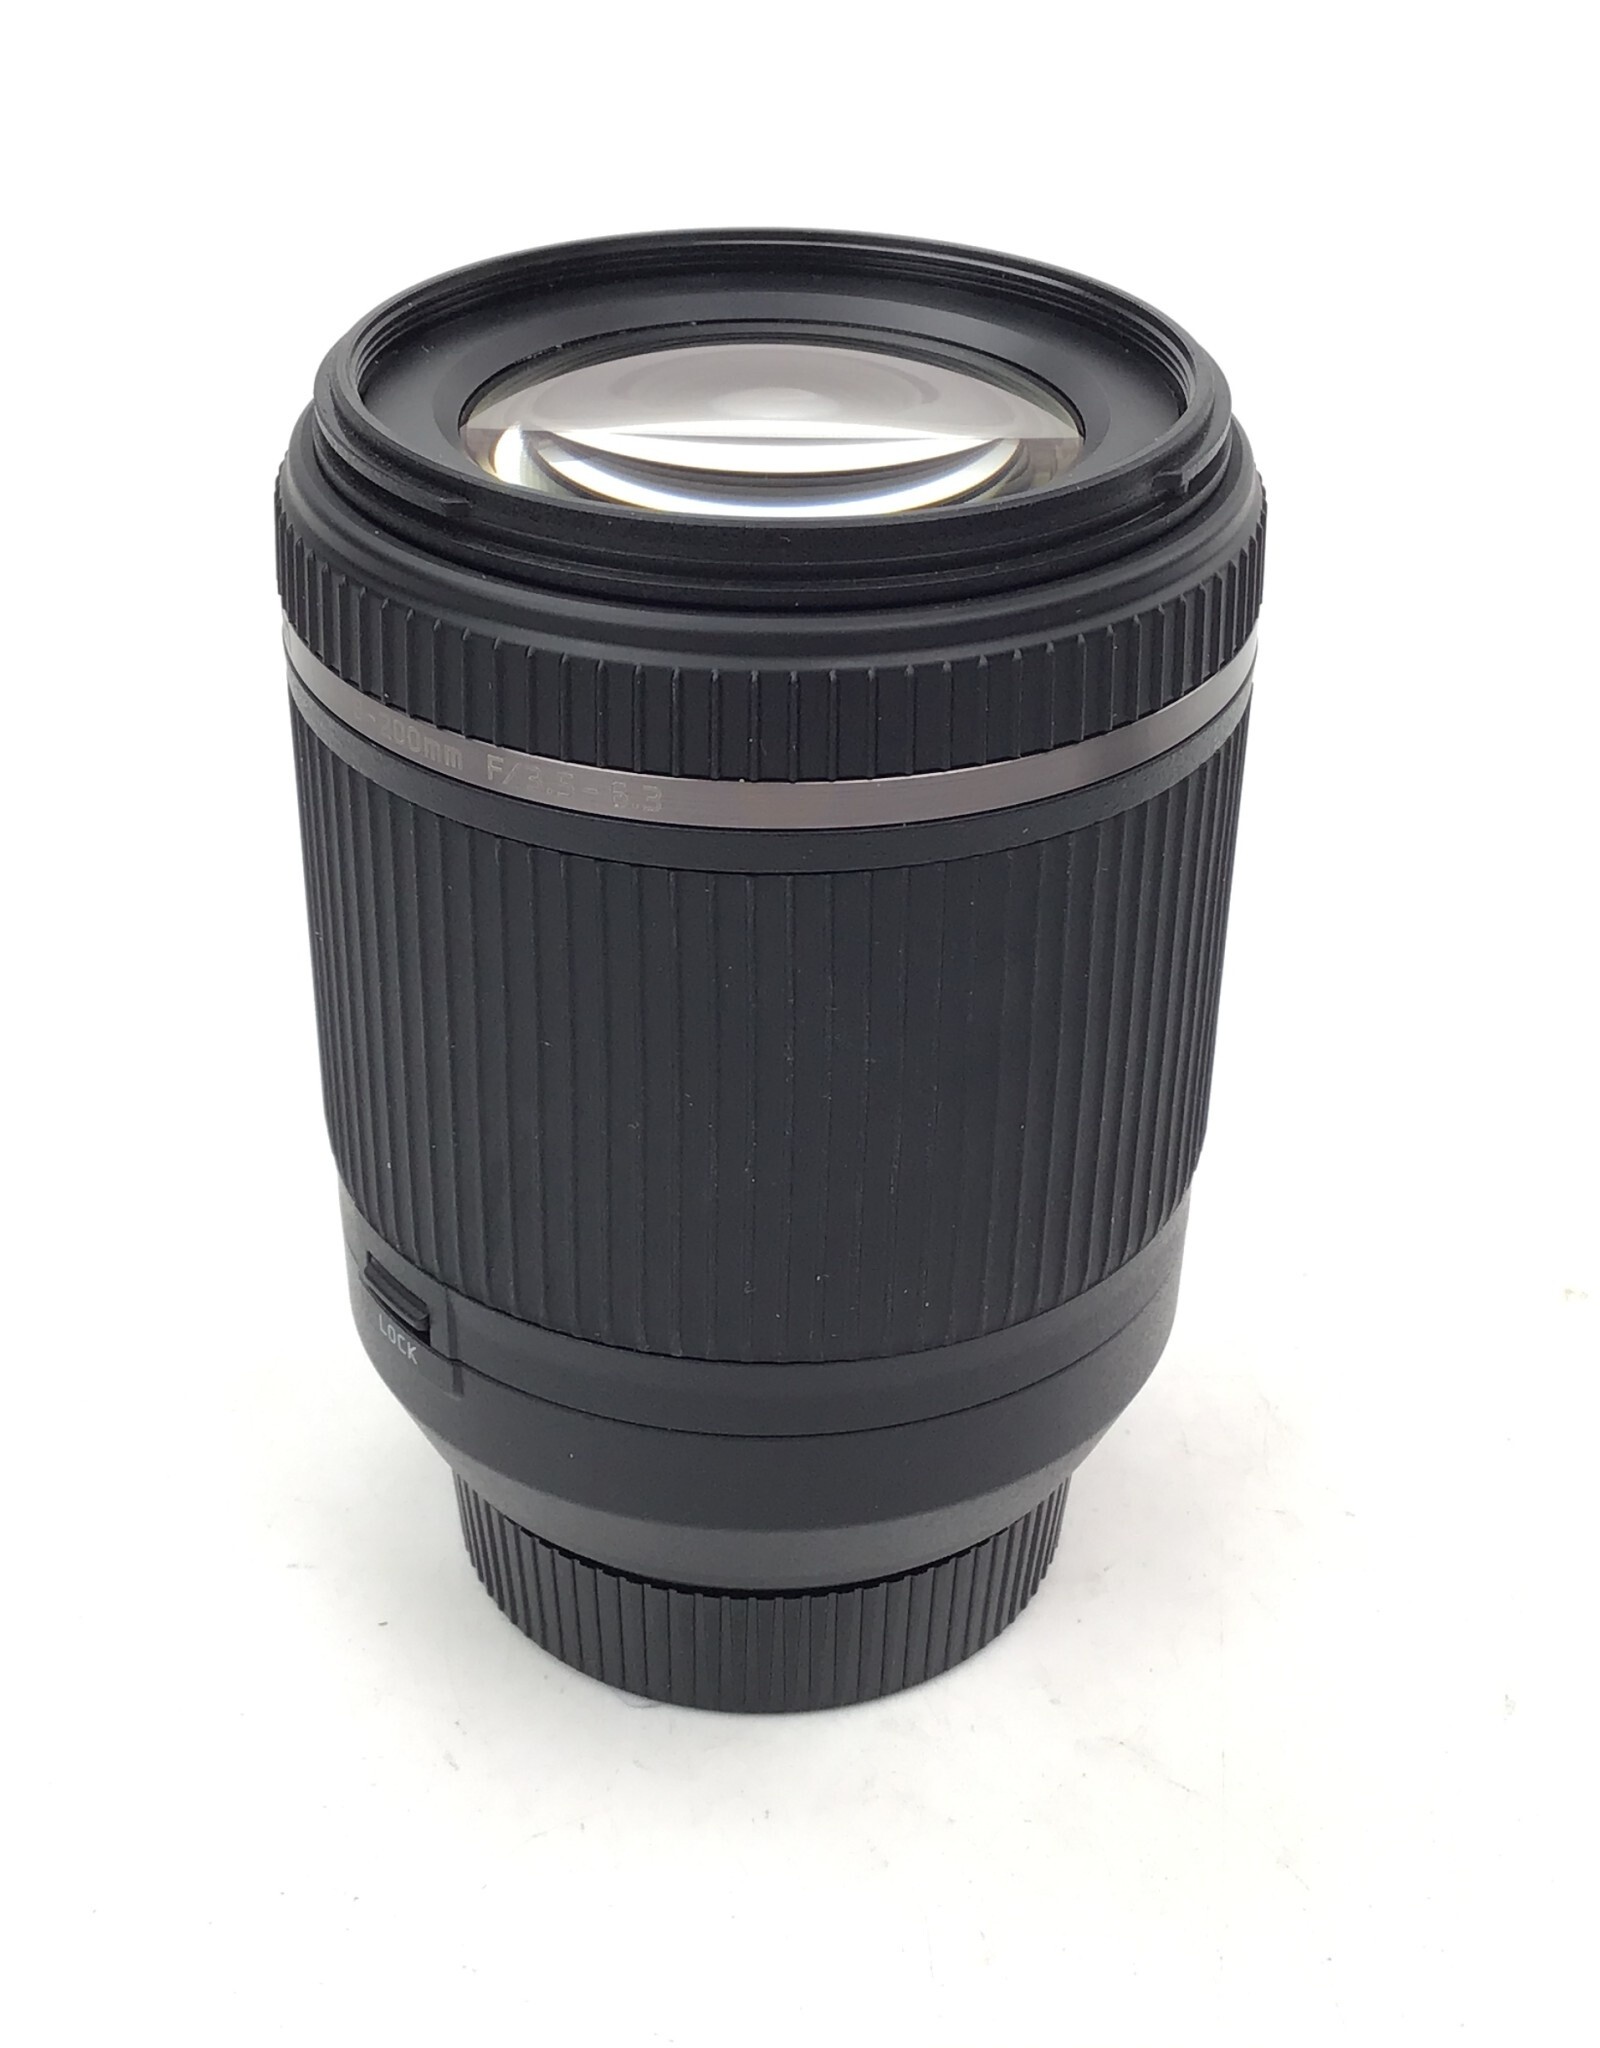 NIKON Tamron 18-200mm f3.5-6.3 VC Lens for Nikon Used Good